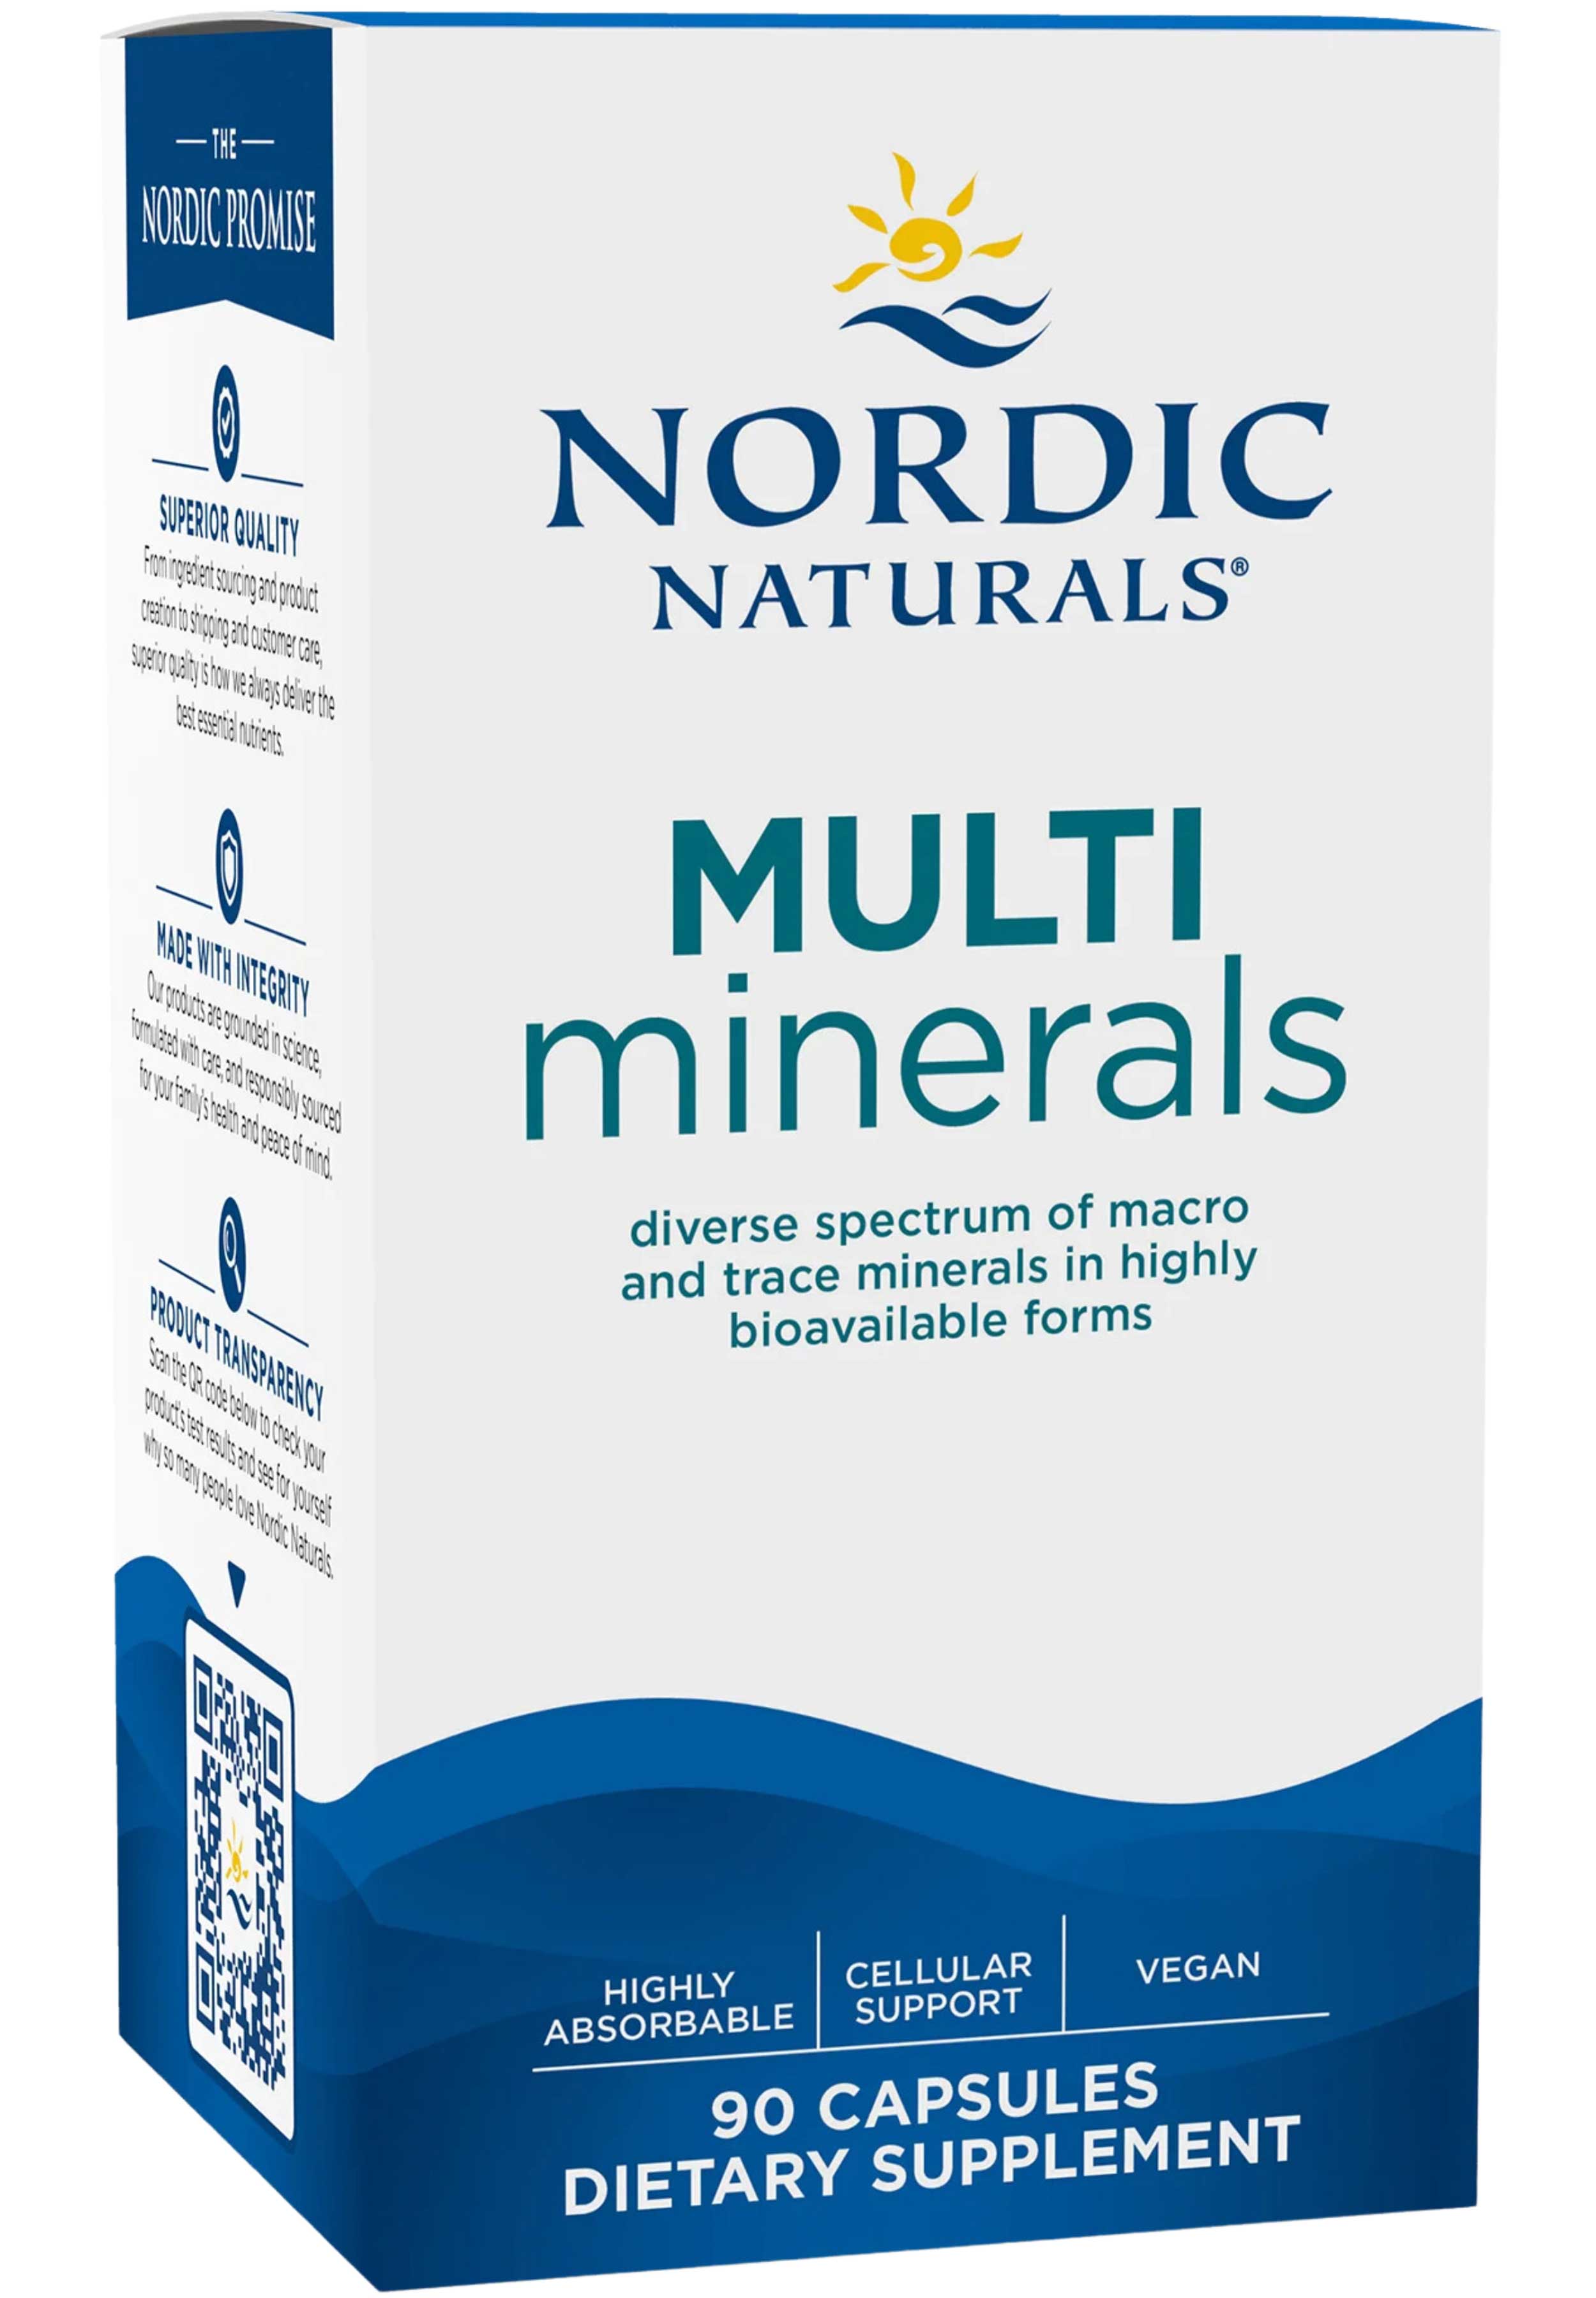 Nordic Naturals Multi Minerals